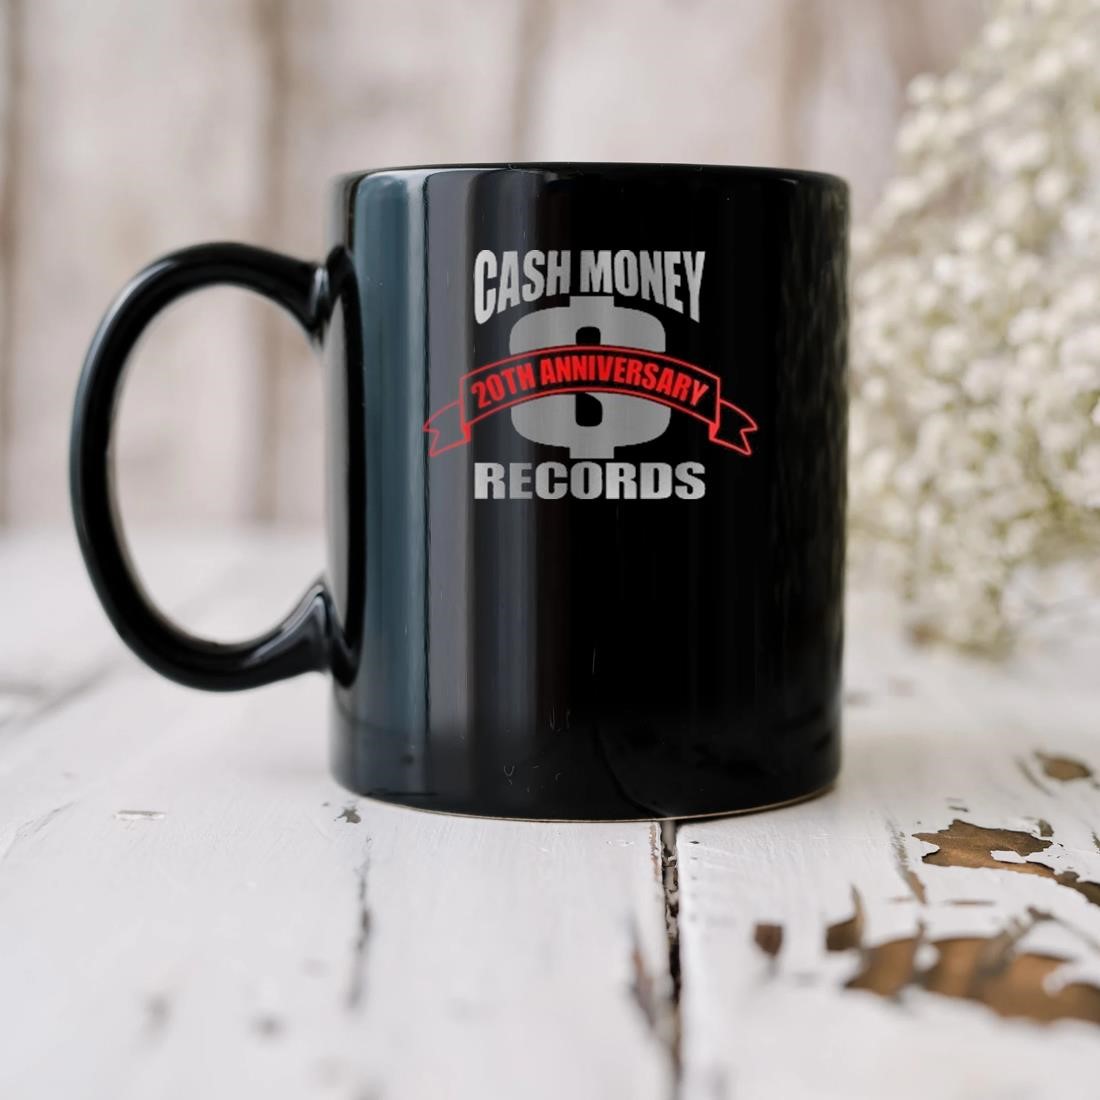 Cash Money 20th Anniversary Records Mug biu.jpg